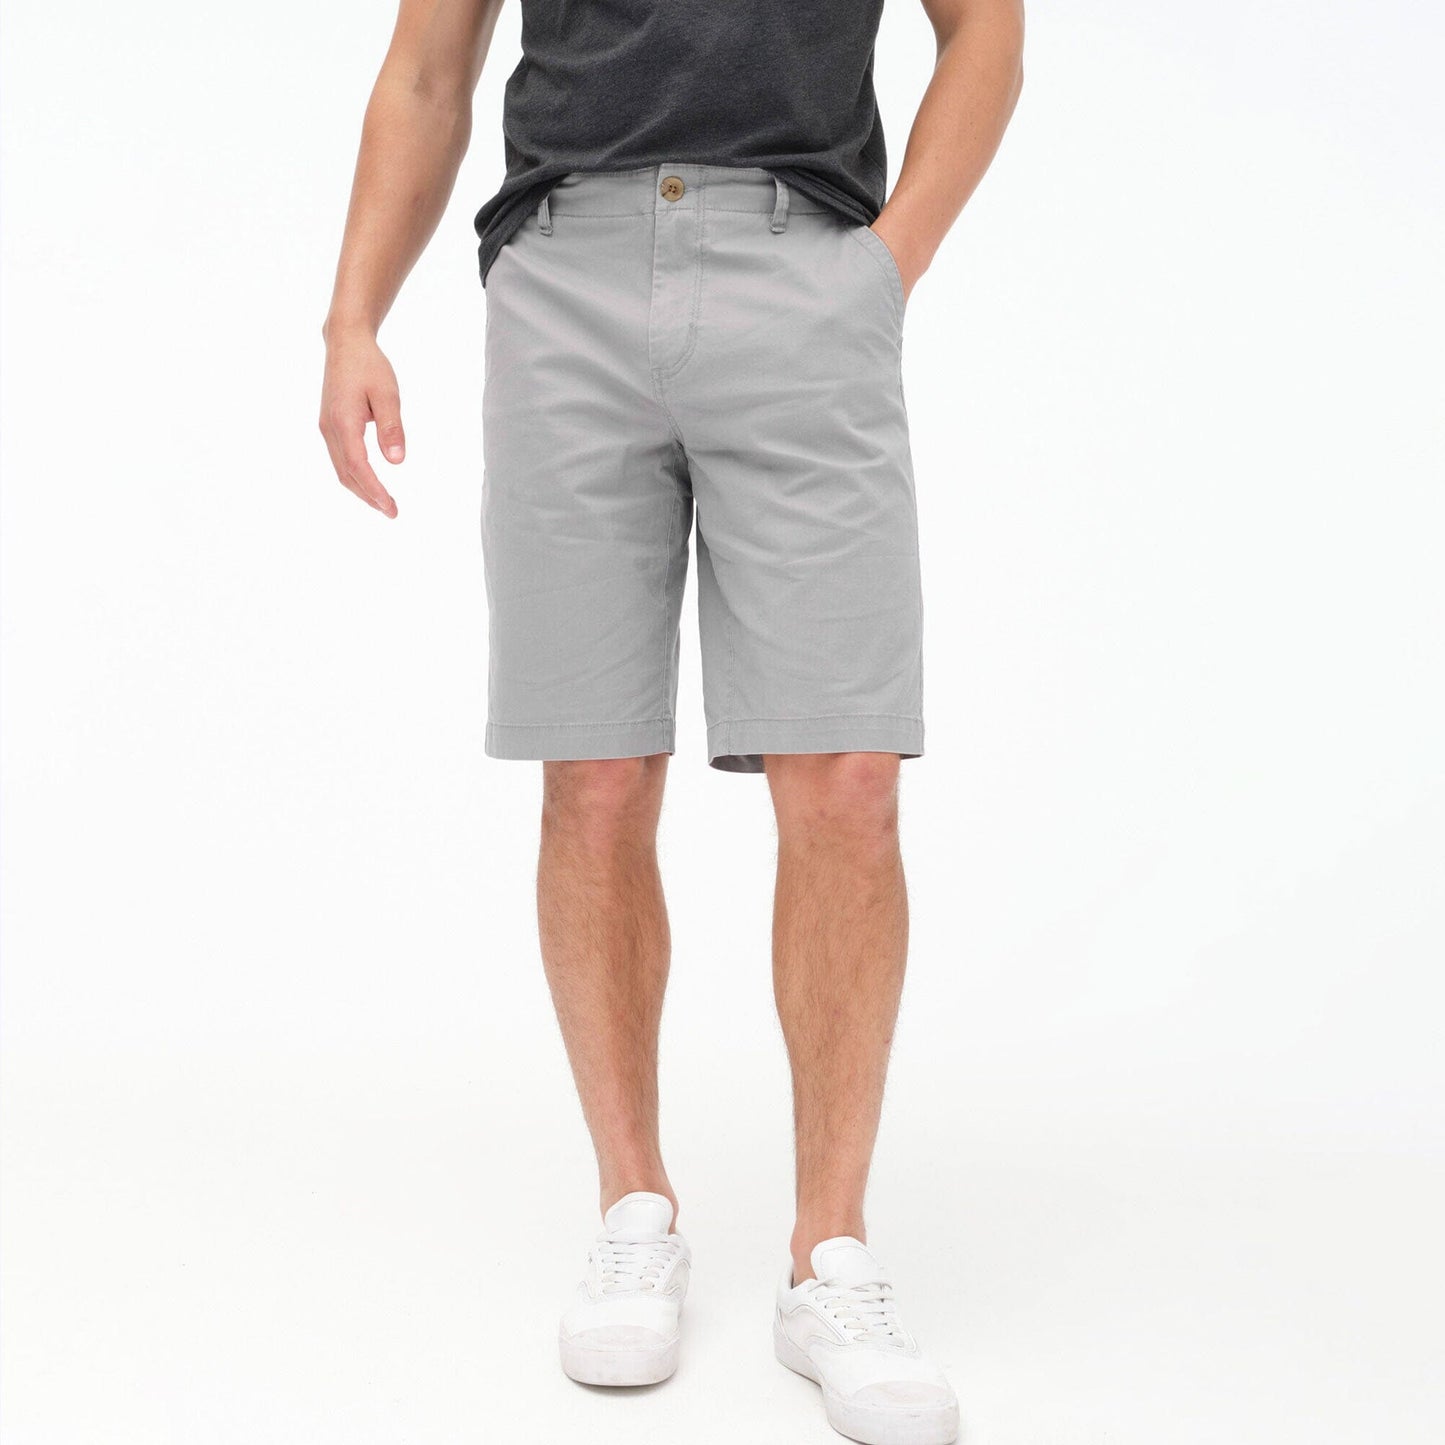 Cut Label Men's Classic Twill Shorts Men's Shorts Ril SMC Grey 26 19